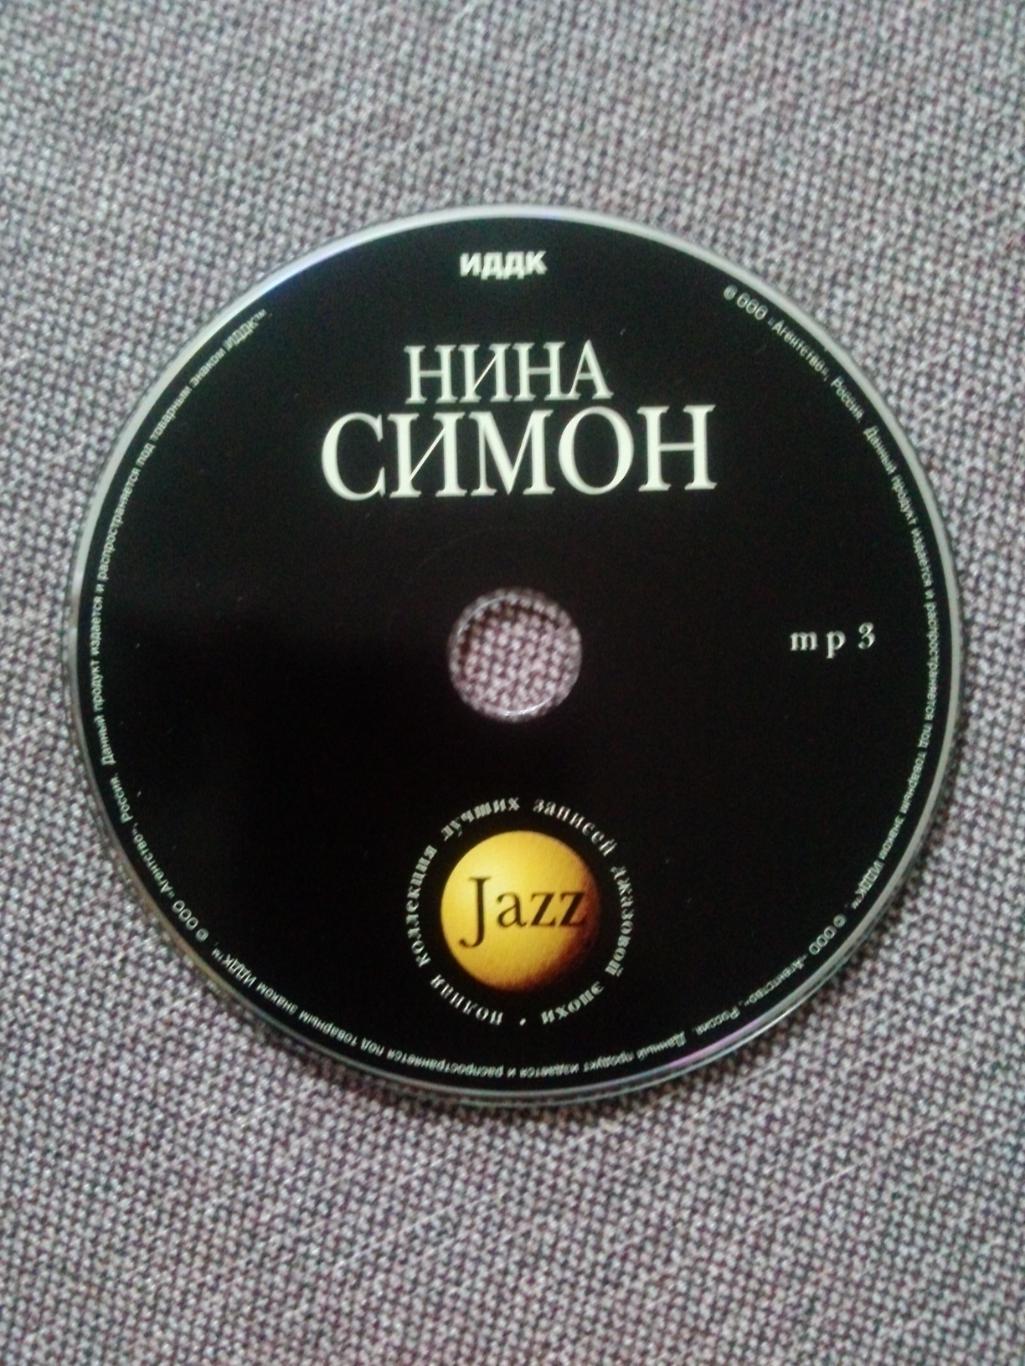 MP - 3 CD диск : Нина Симон (Nina Simone) 1958 - 1963 гг. (6 альбомов) Джаз-блюз 4